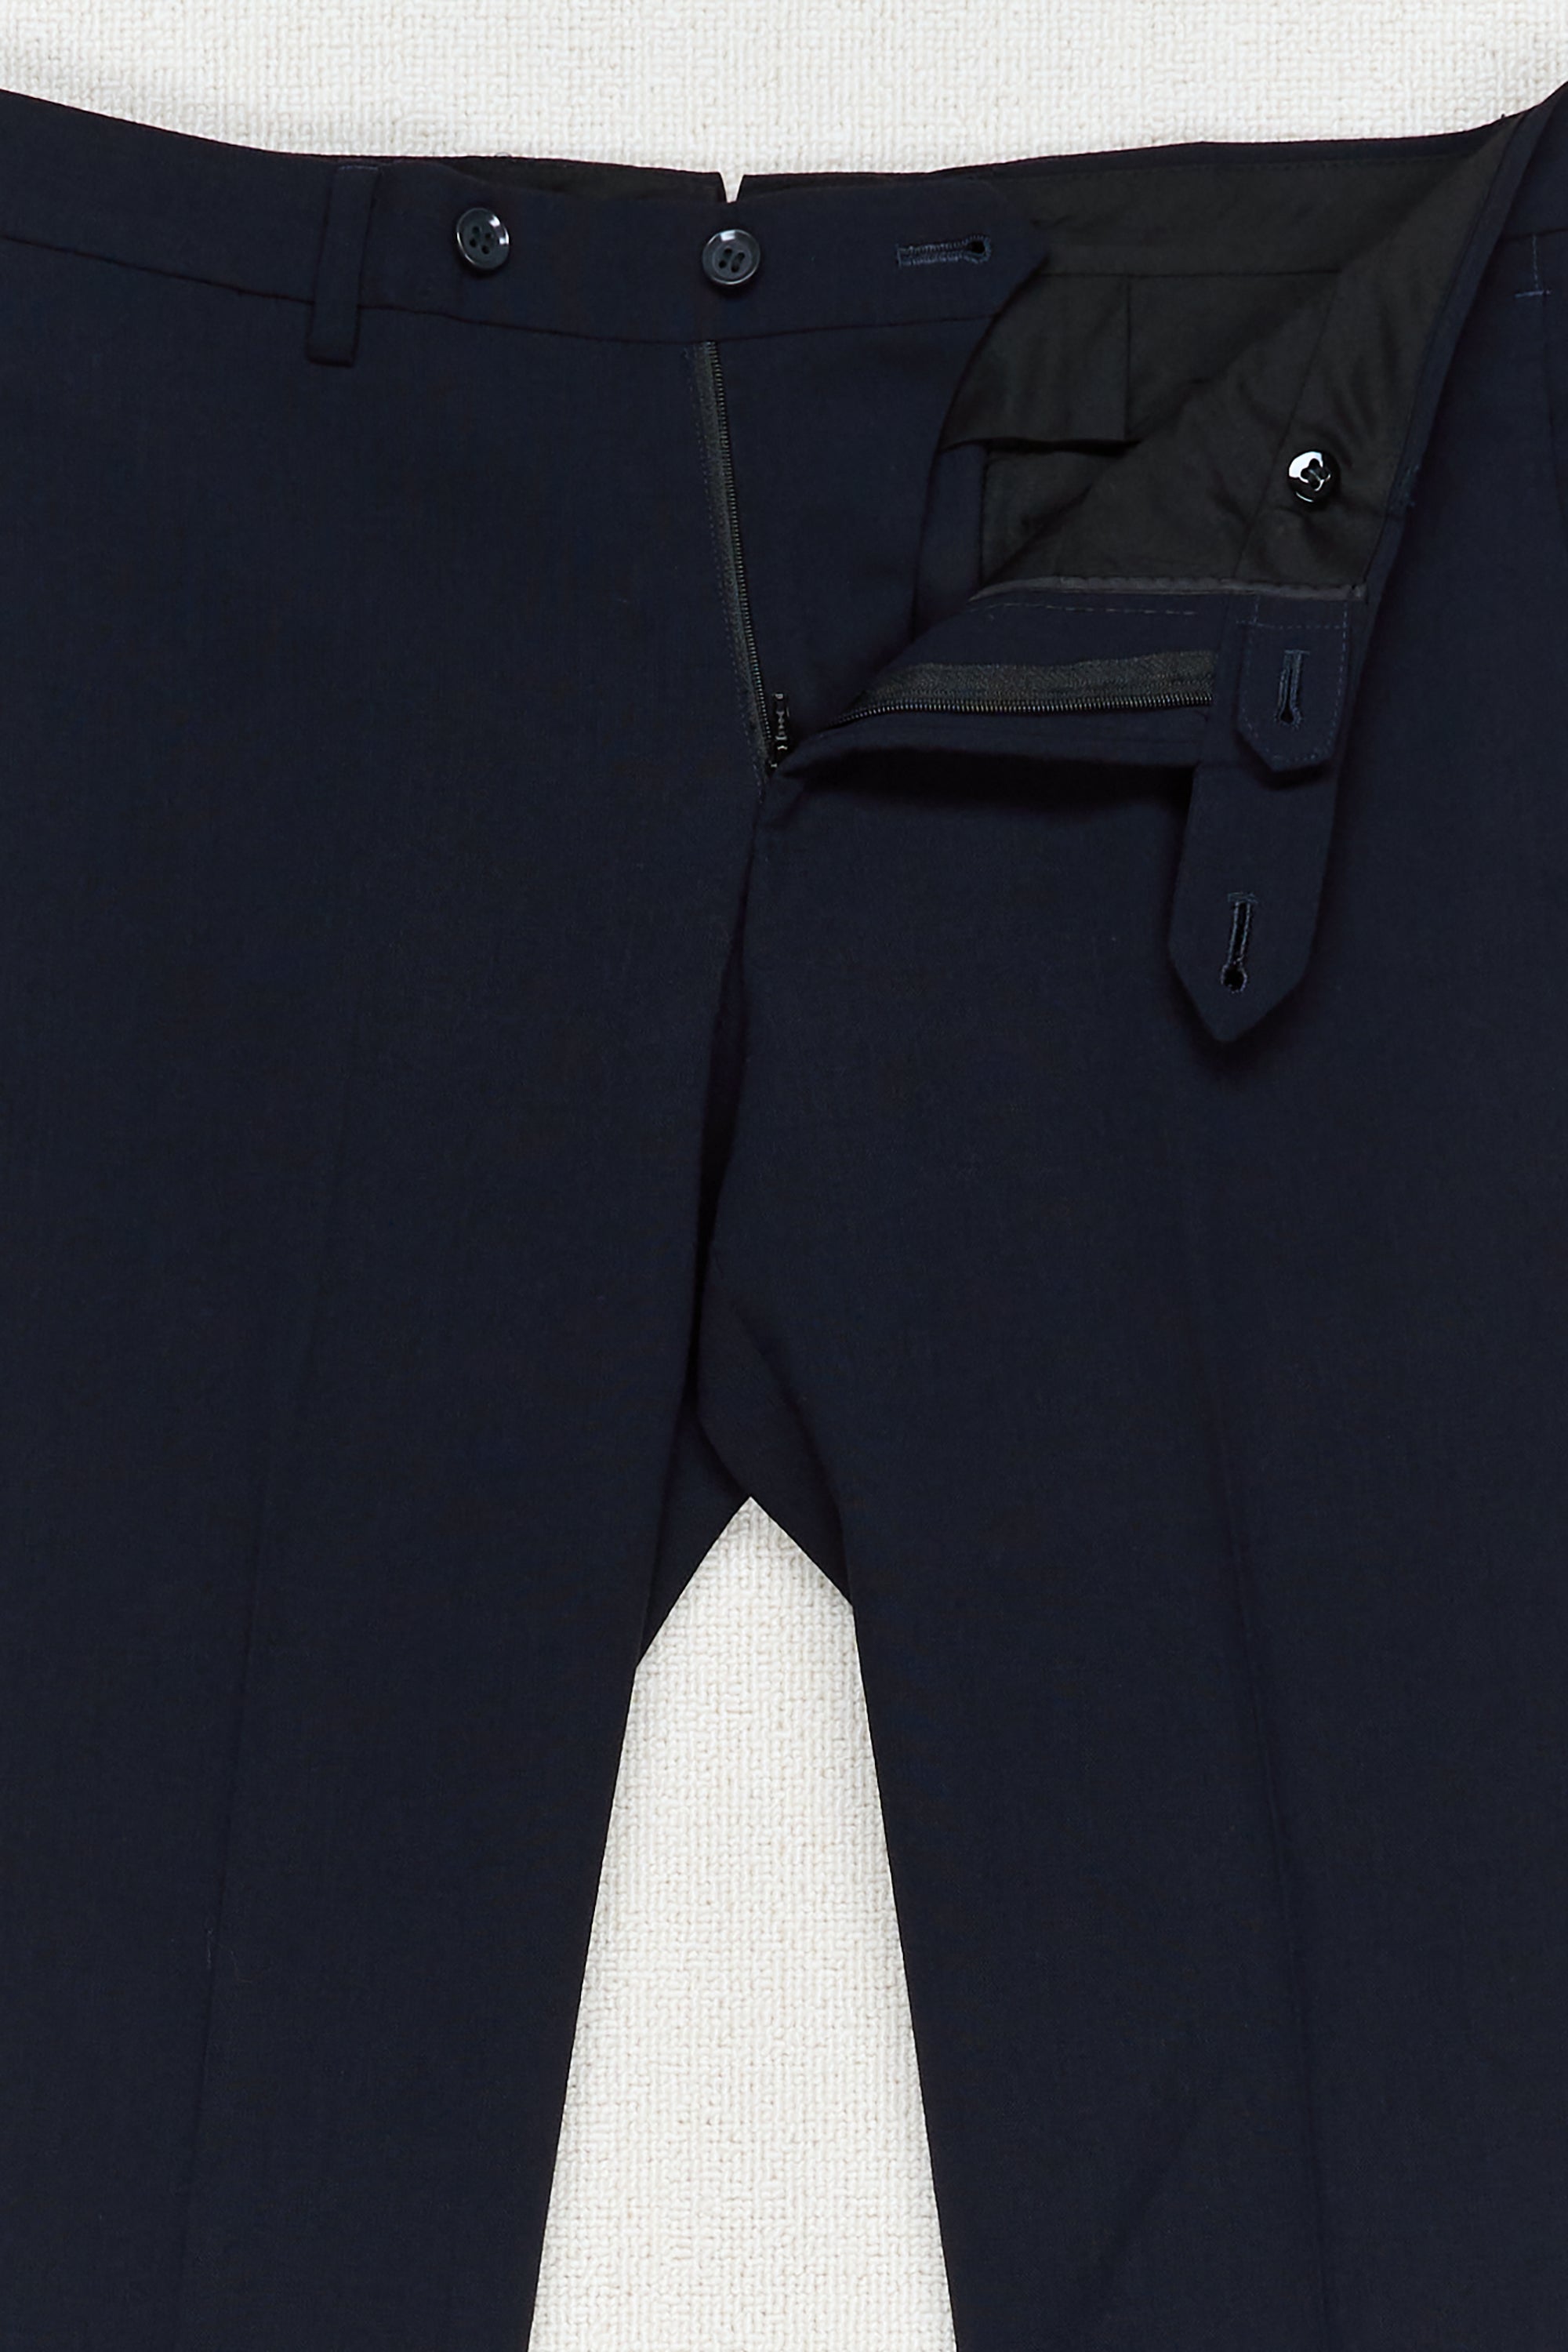 Ring Jacket 184 Navy Wool/Silk "Ice Twist" Suit